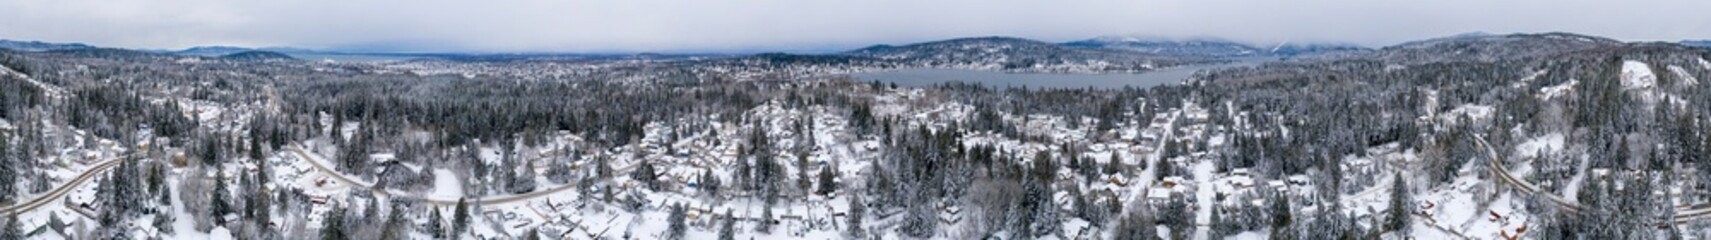 Snowing in City of Bellingham Washington USA Aerial Birds Eye 360 Winter Landscape